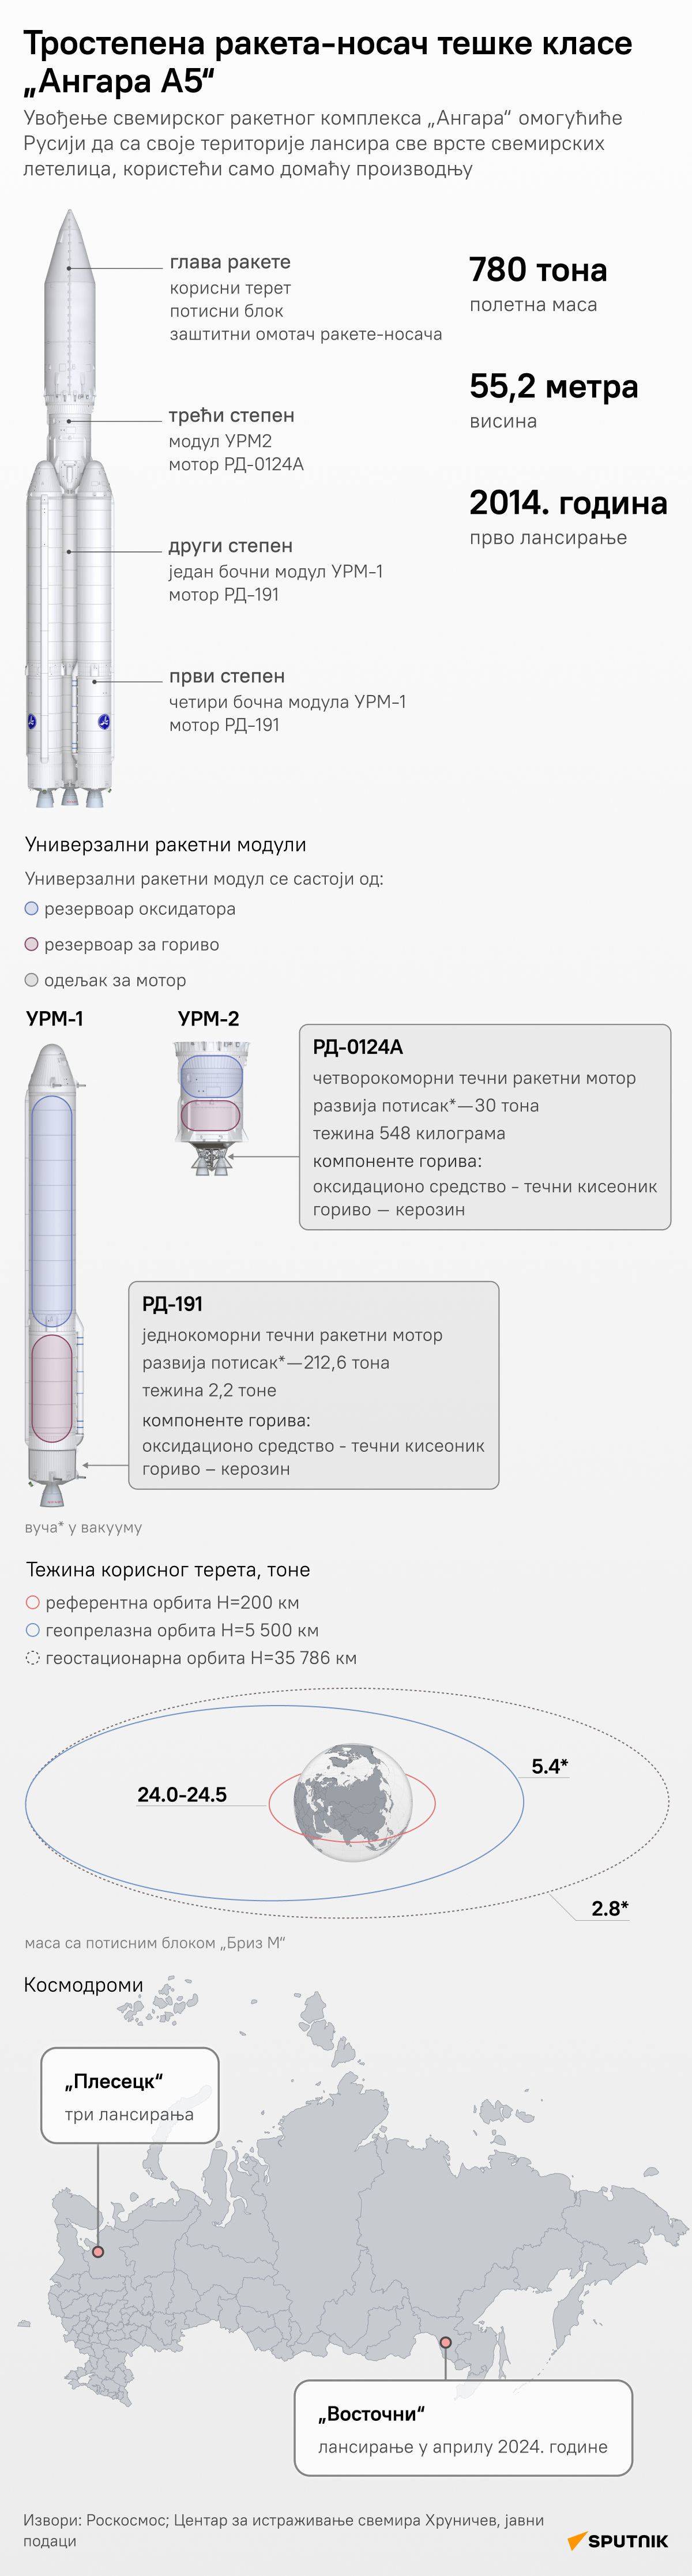 инфографика ракета Ангара ЋИР деск - Sputnik Србија